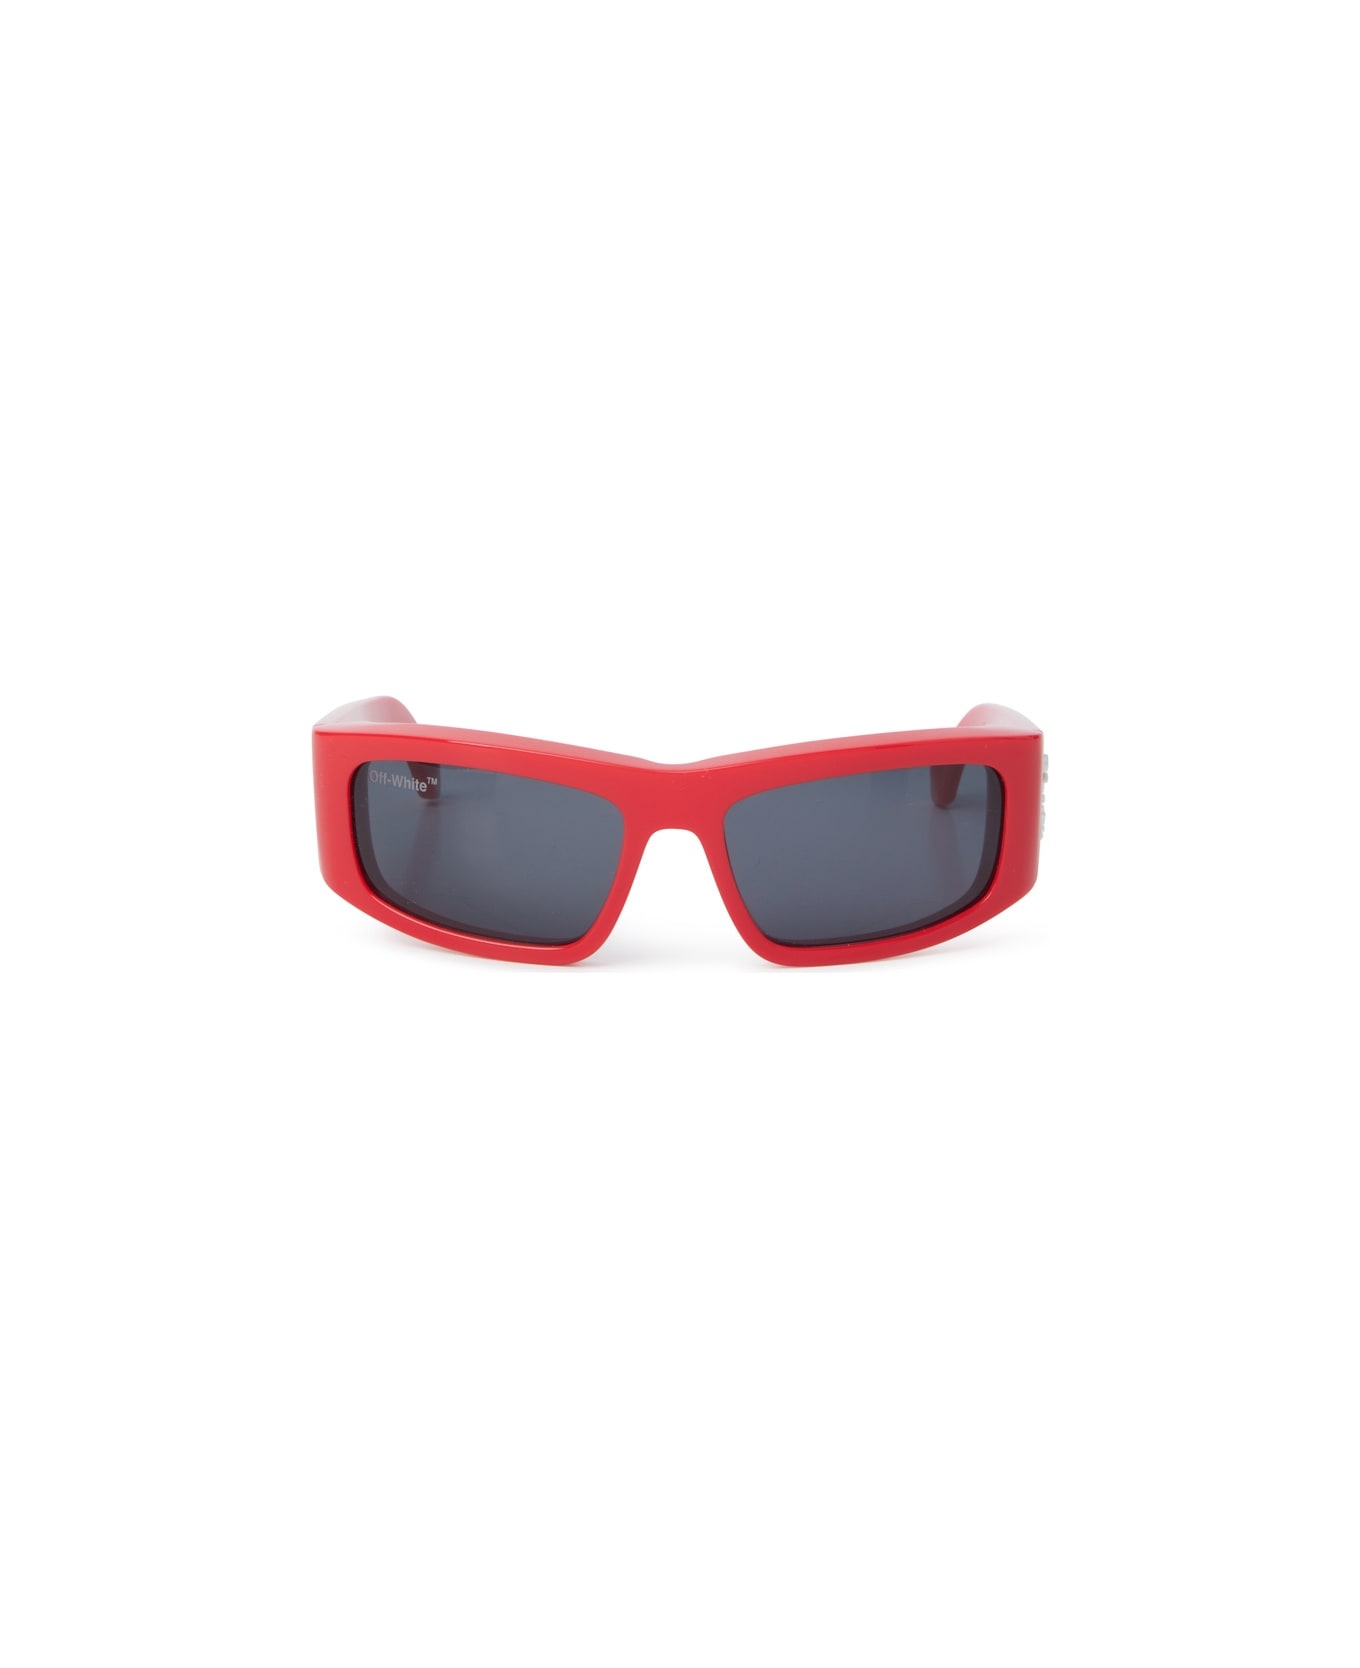 Off-White JOSEPH SUNGLASSES Sunglasses - Red サングラス